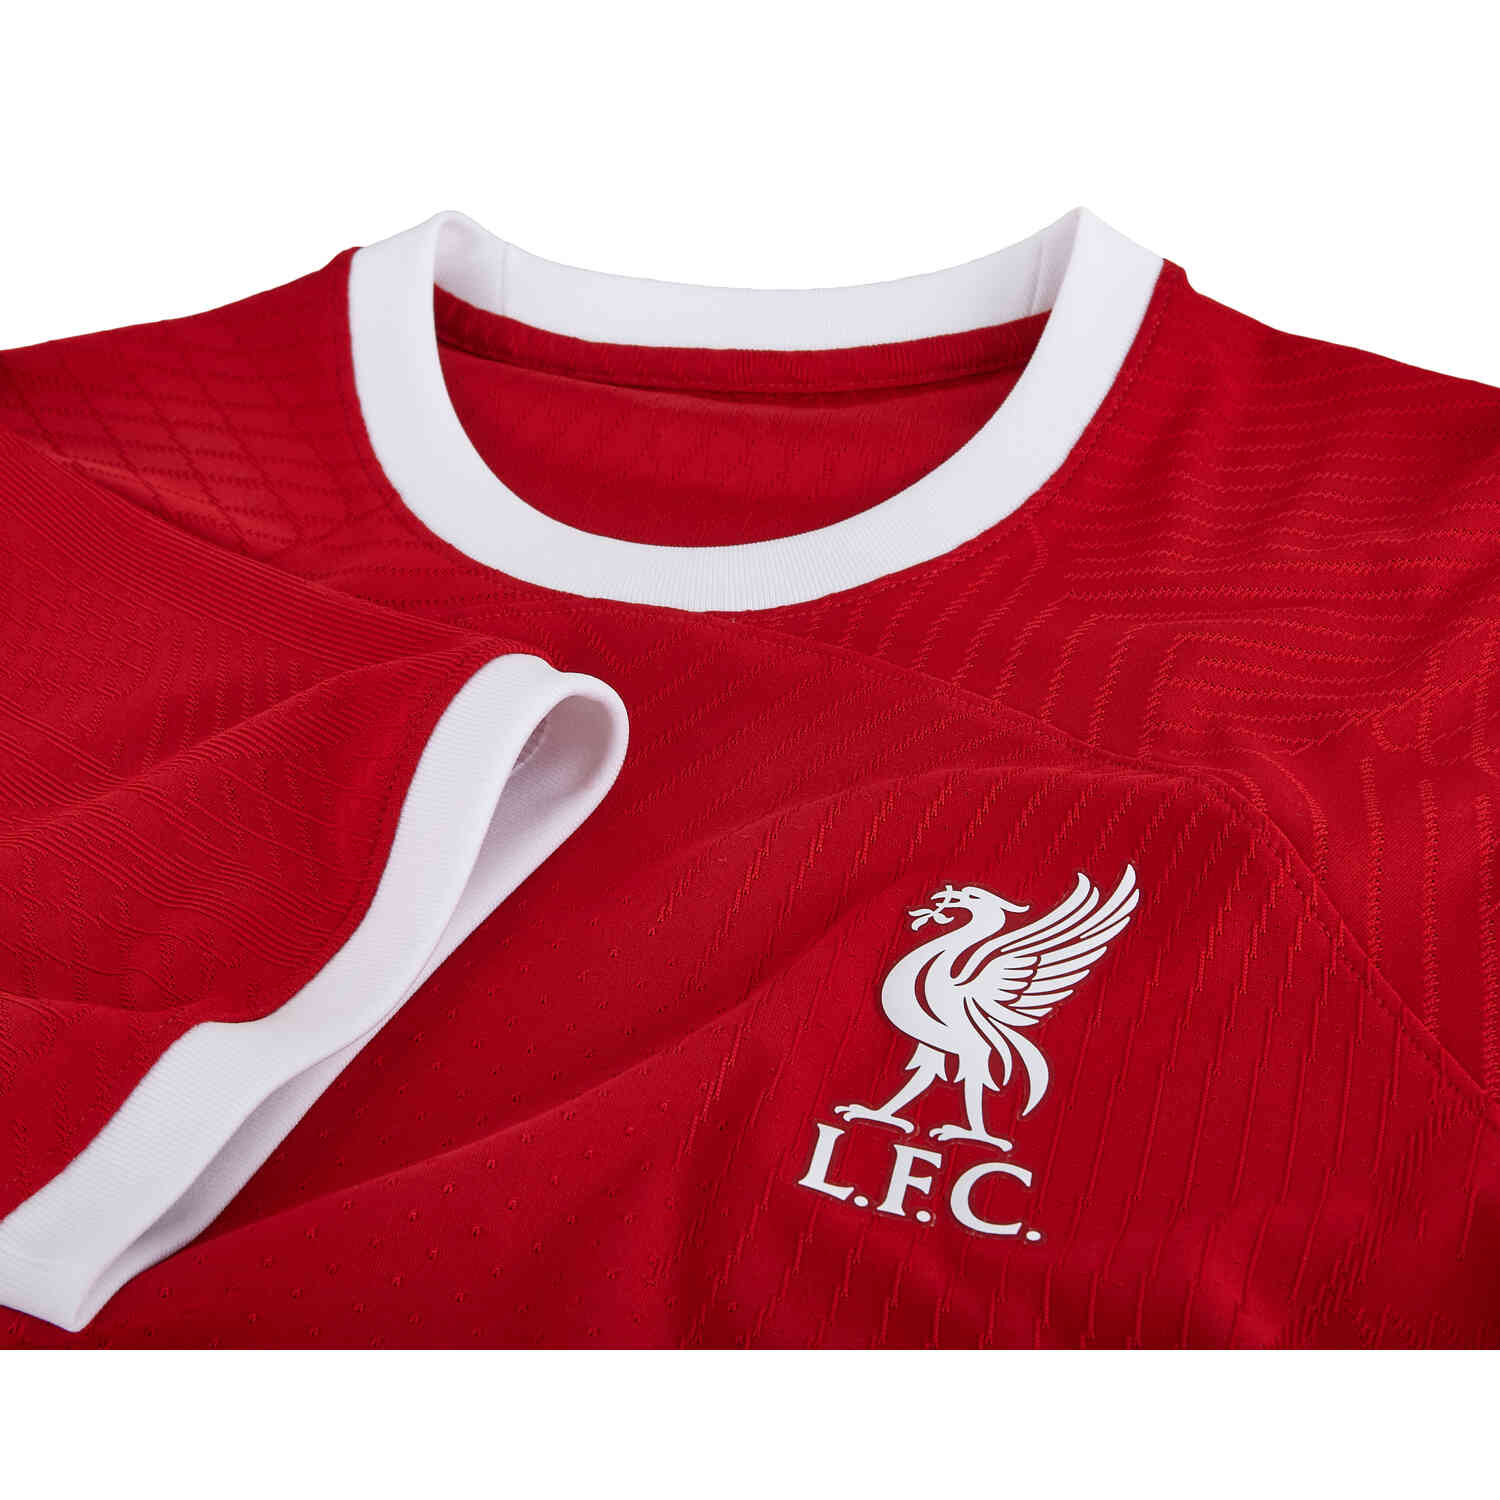 2023/24 Nike Mohamed Salah Liverpool Home Match Jersey